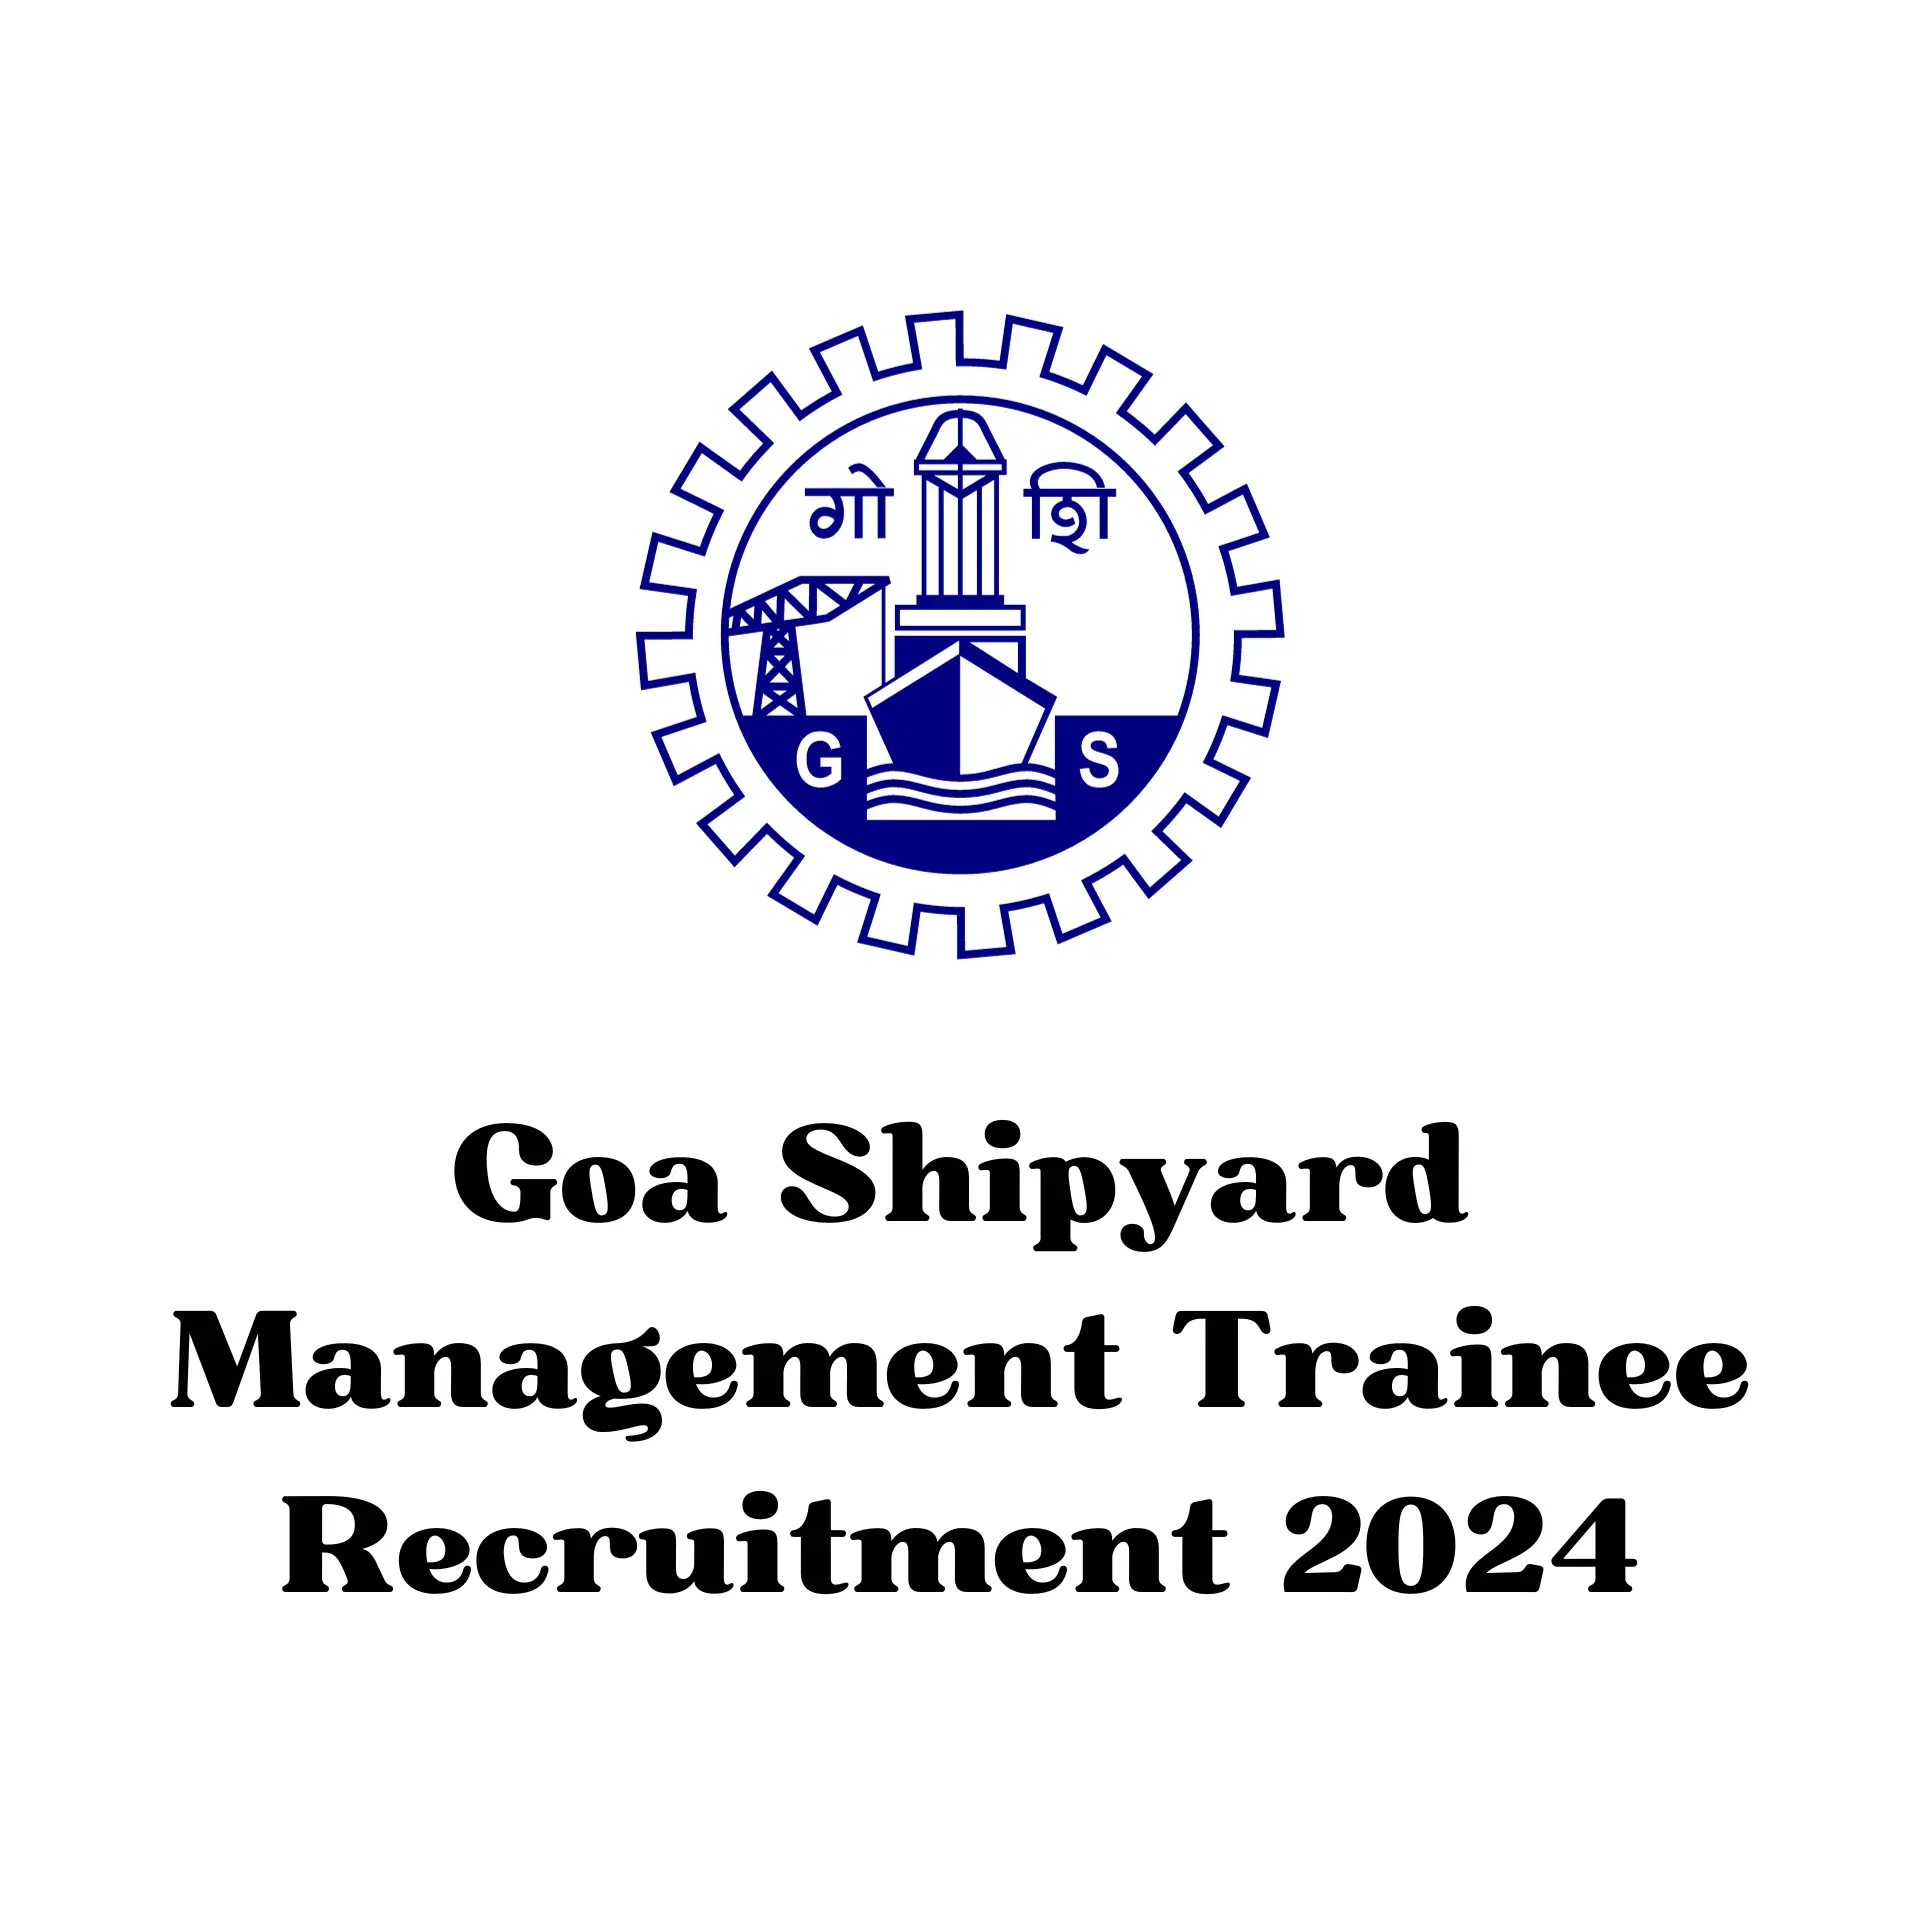 Goa Shipyard Management Trainee Recruitment 2024